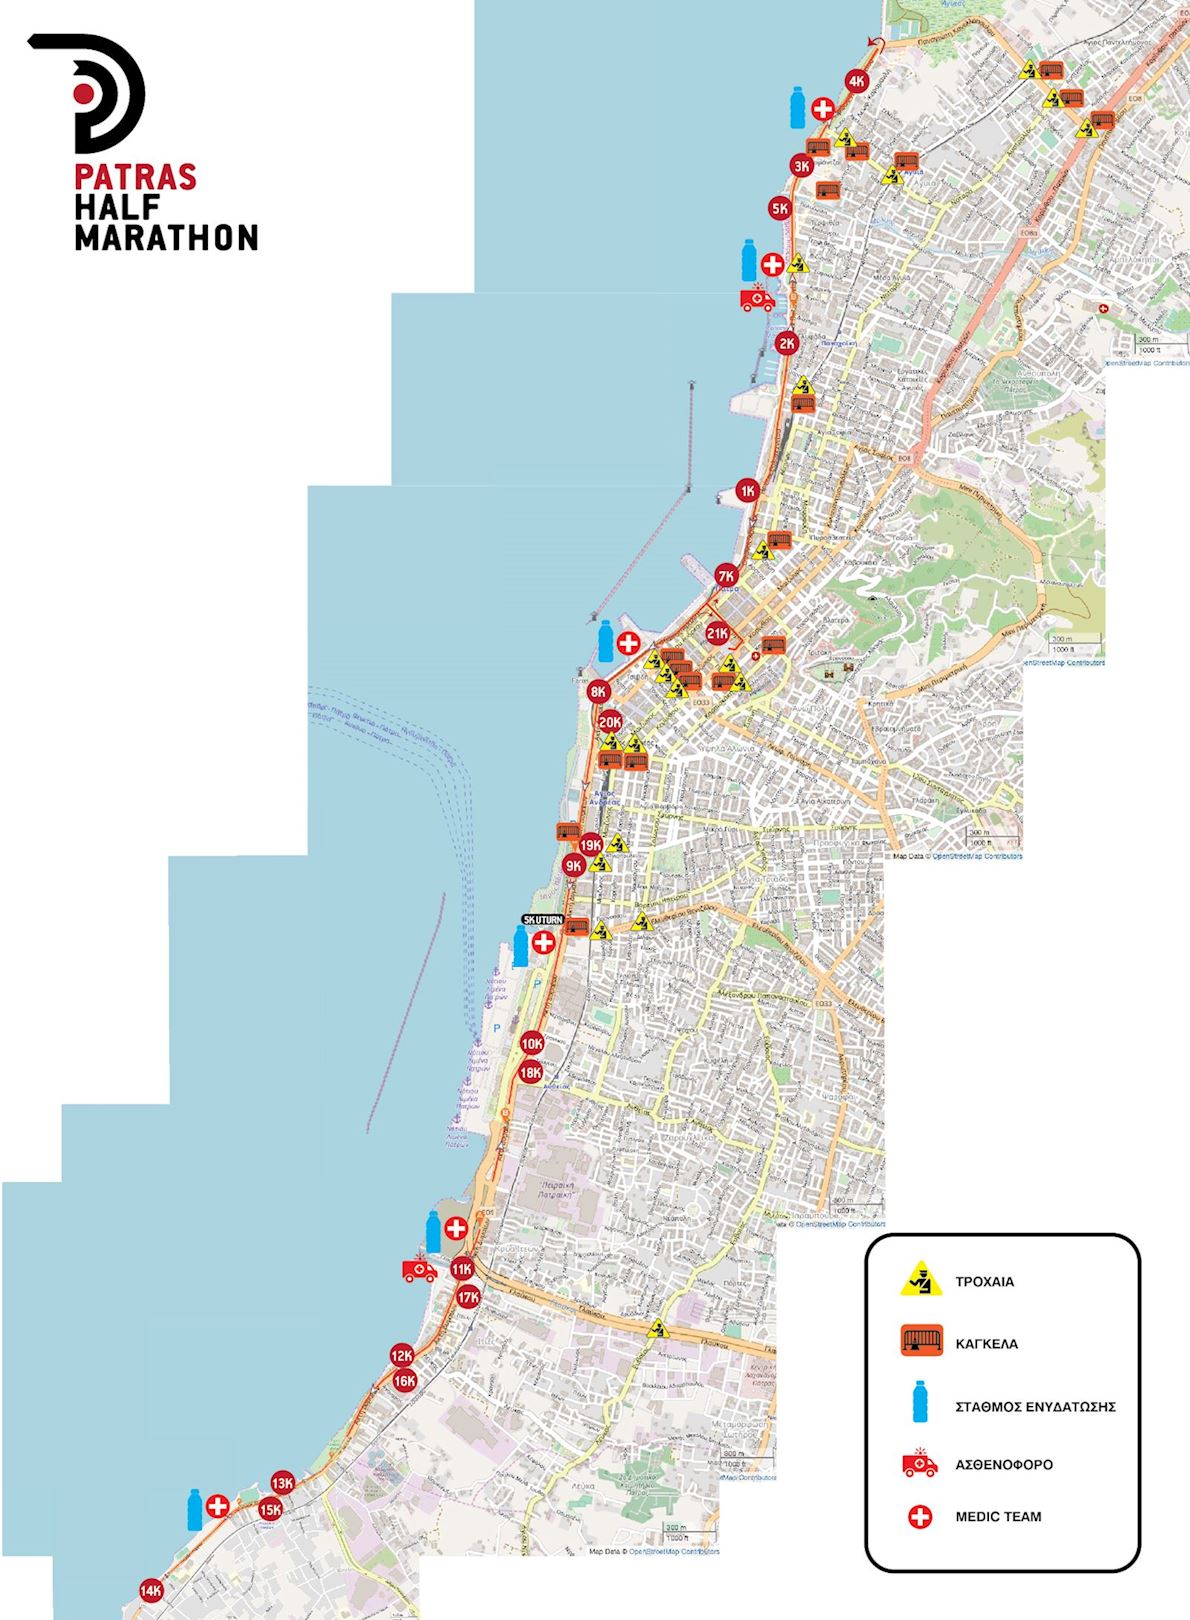 Patras Half Marathon Route Map